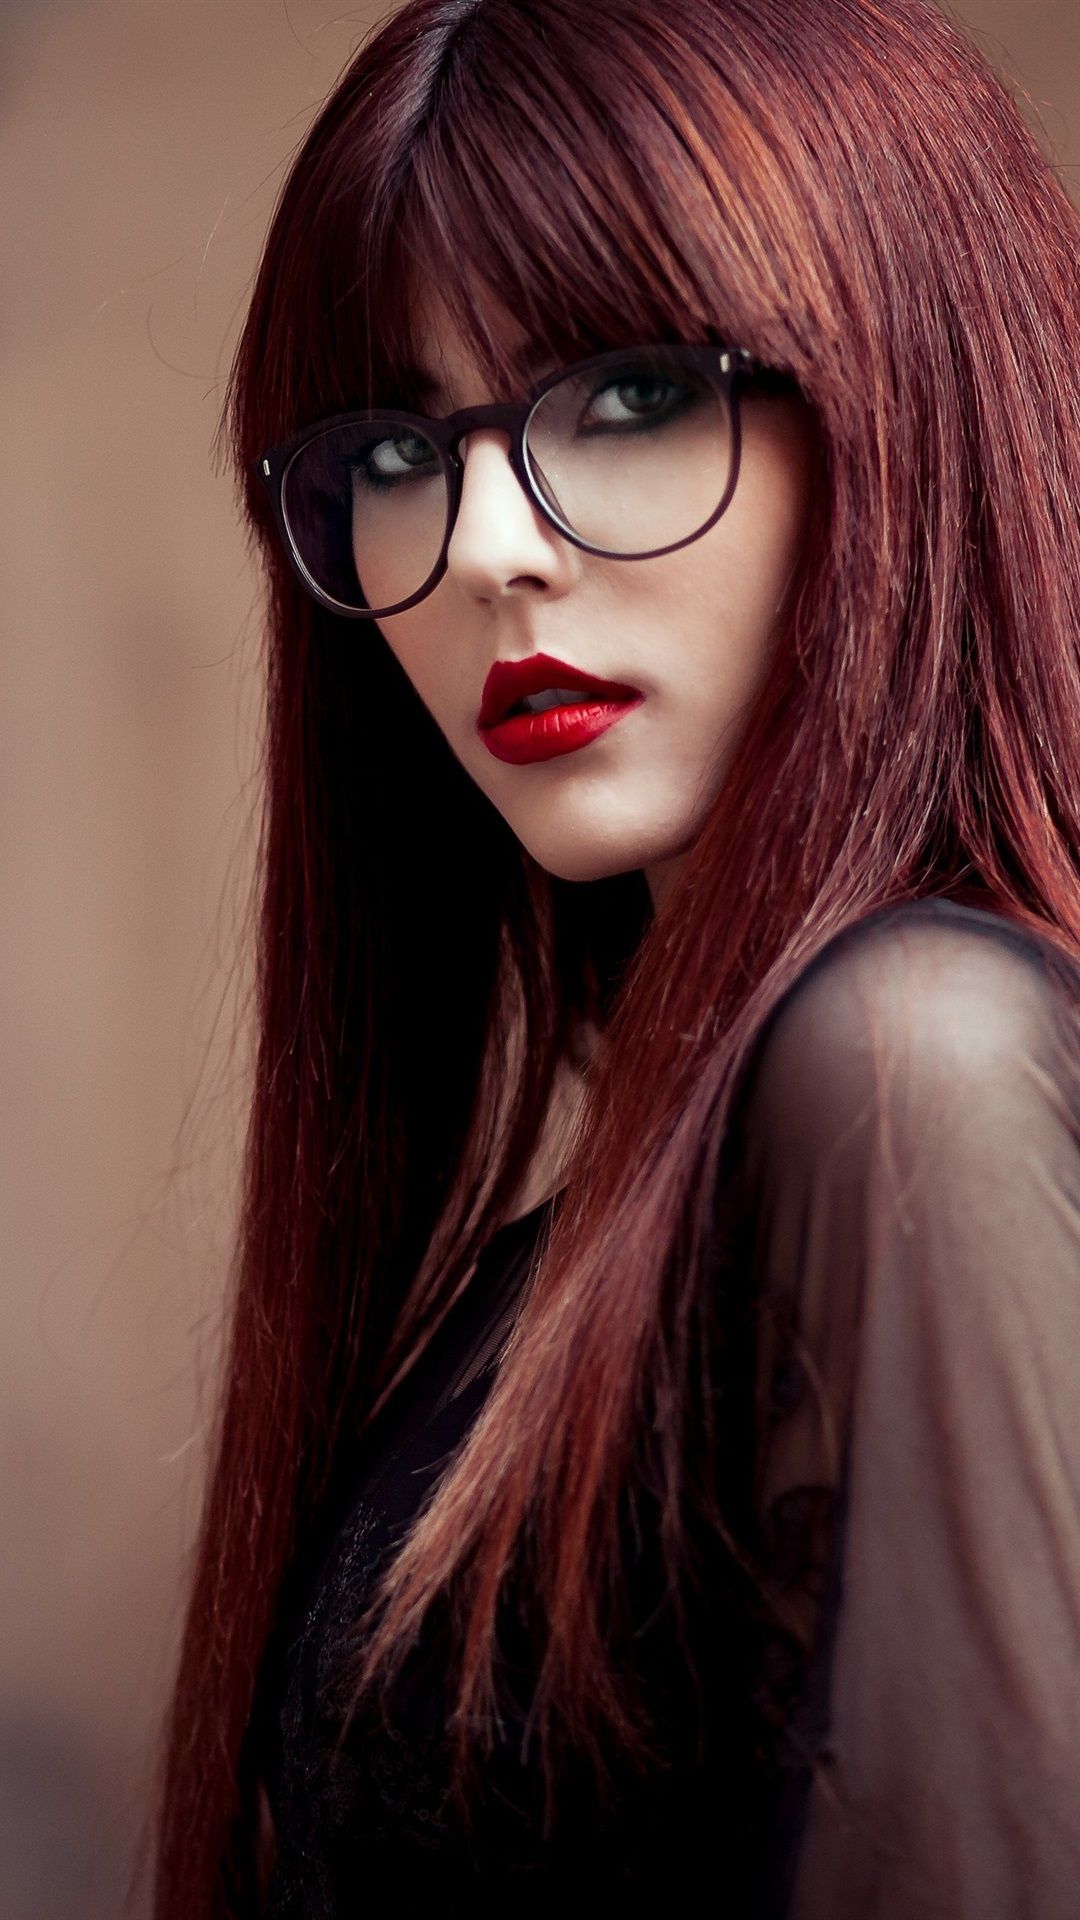 Wallpaper Long hair girl, glasses 3840x2160 UHD 4K Picture, Image